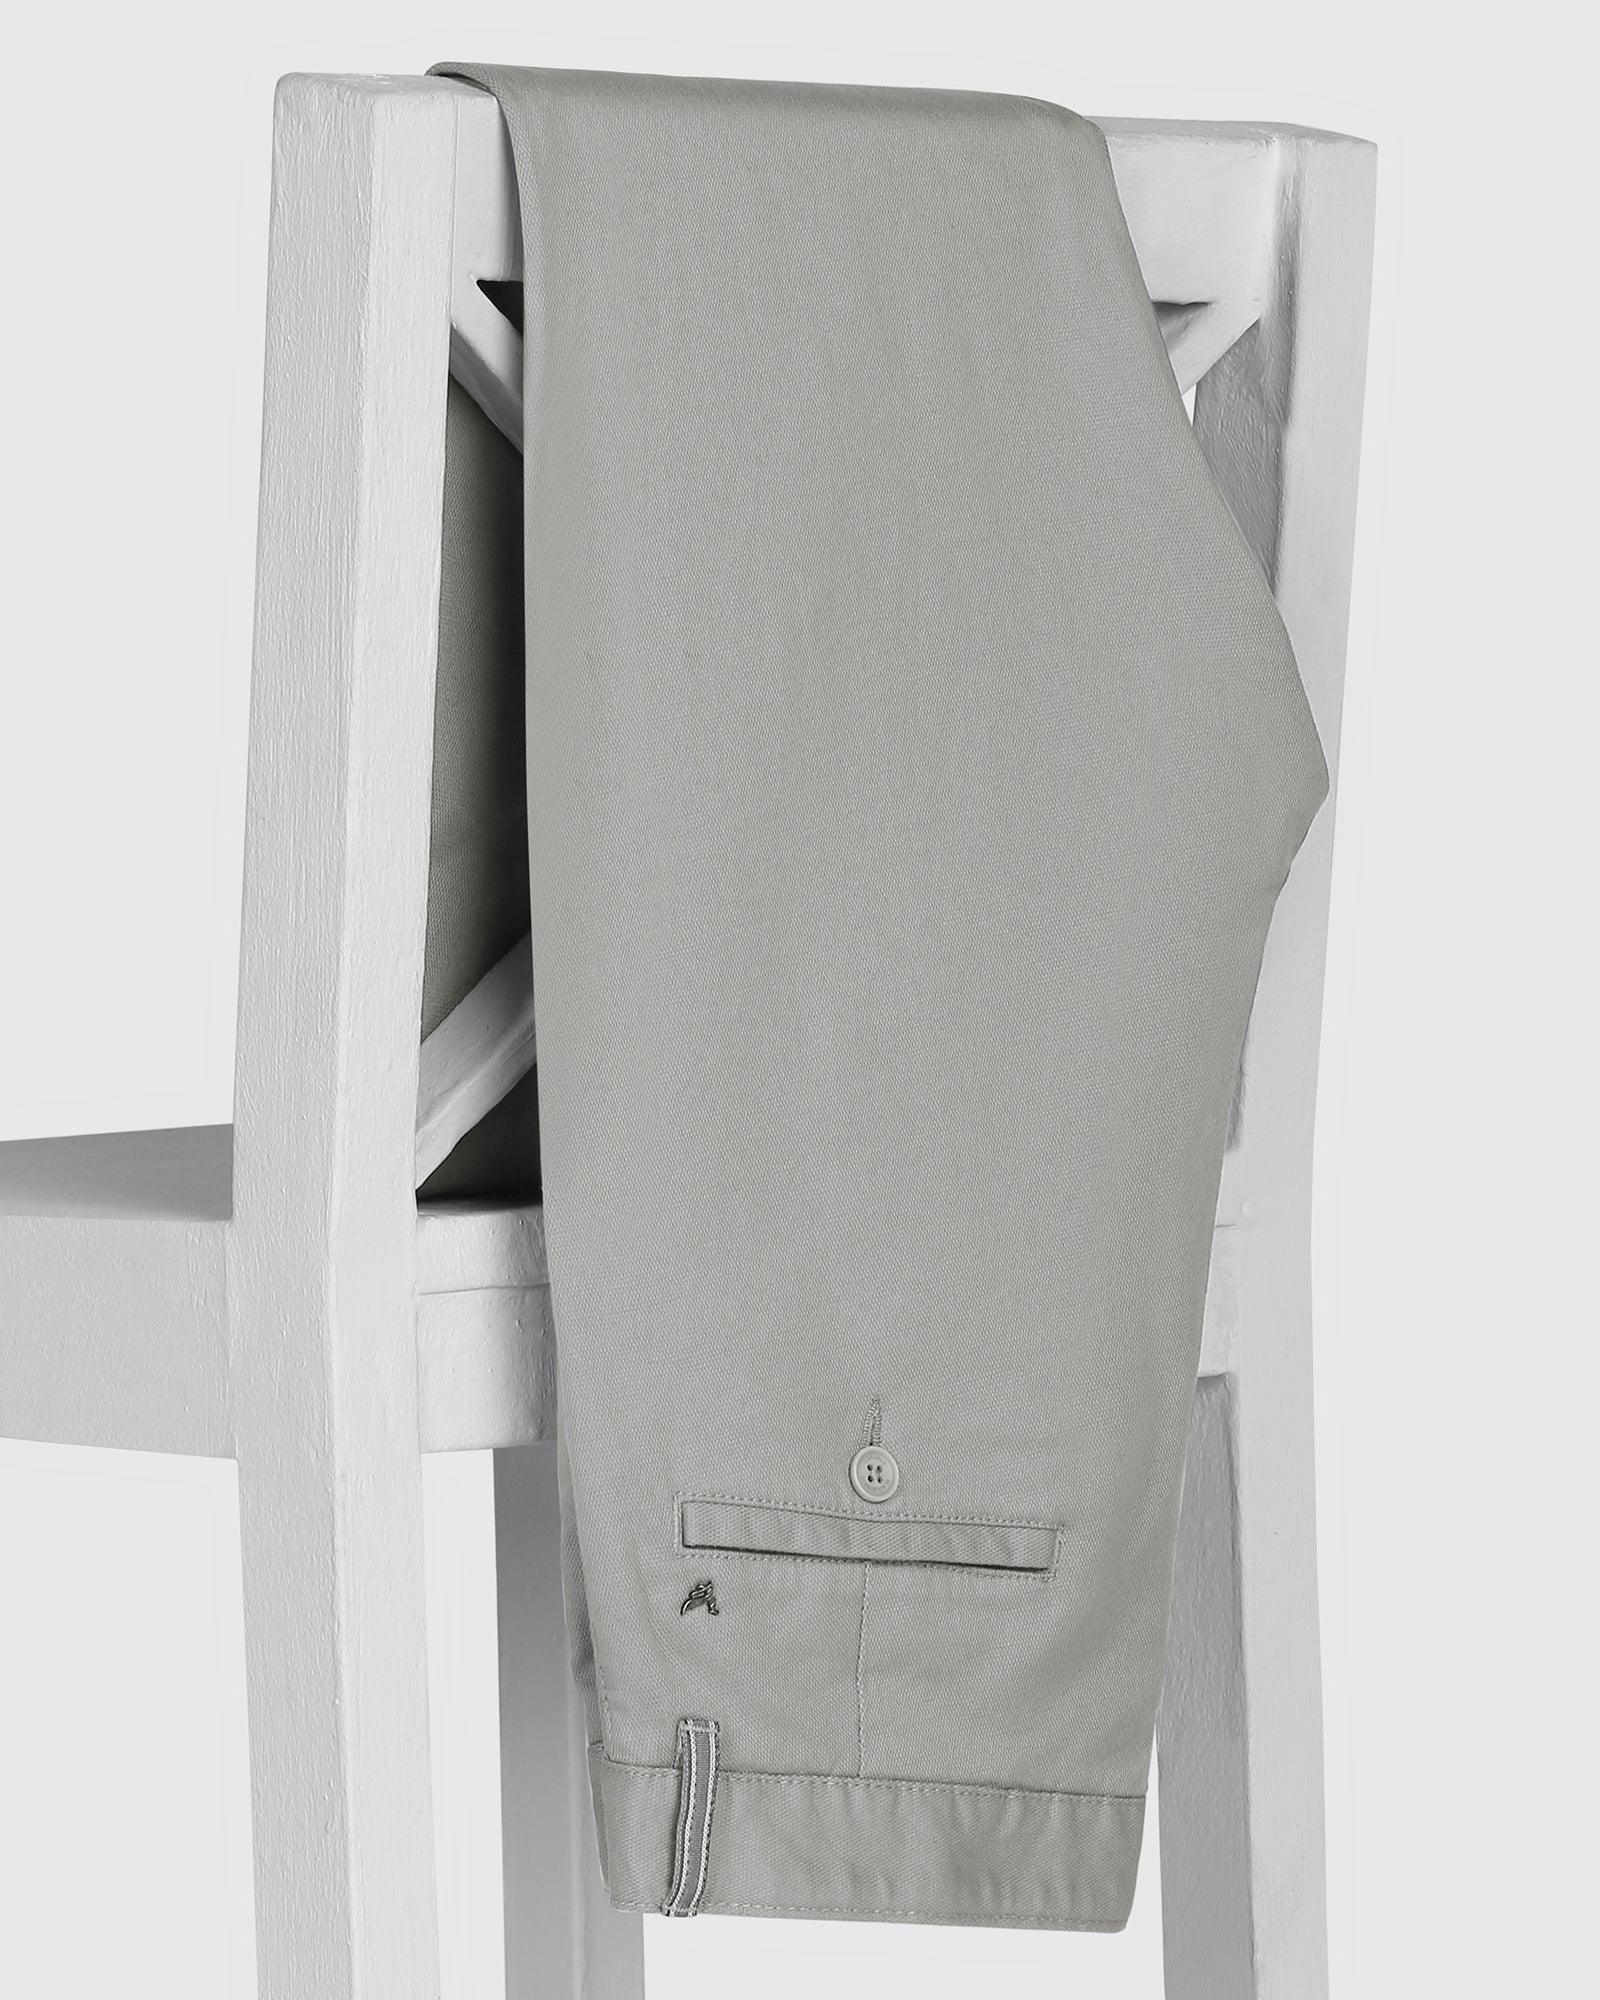 Slim Fit B-91 Casual Grey Textured Khakis - Duncan